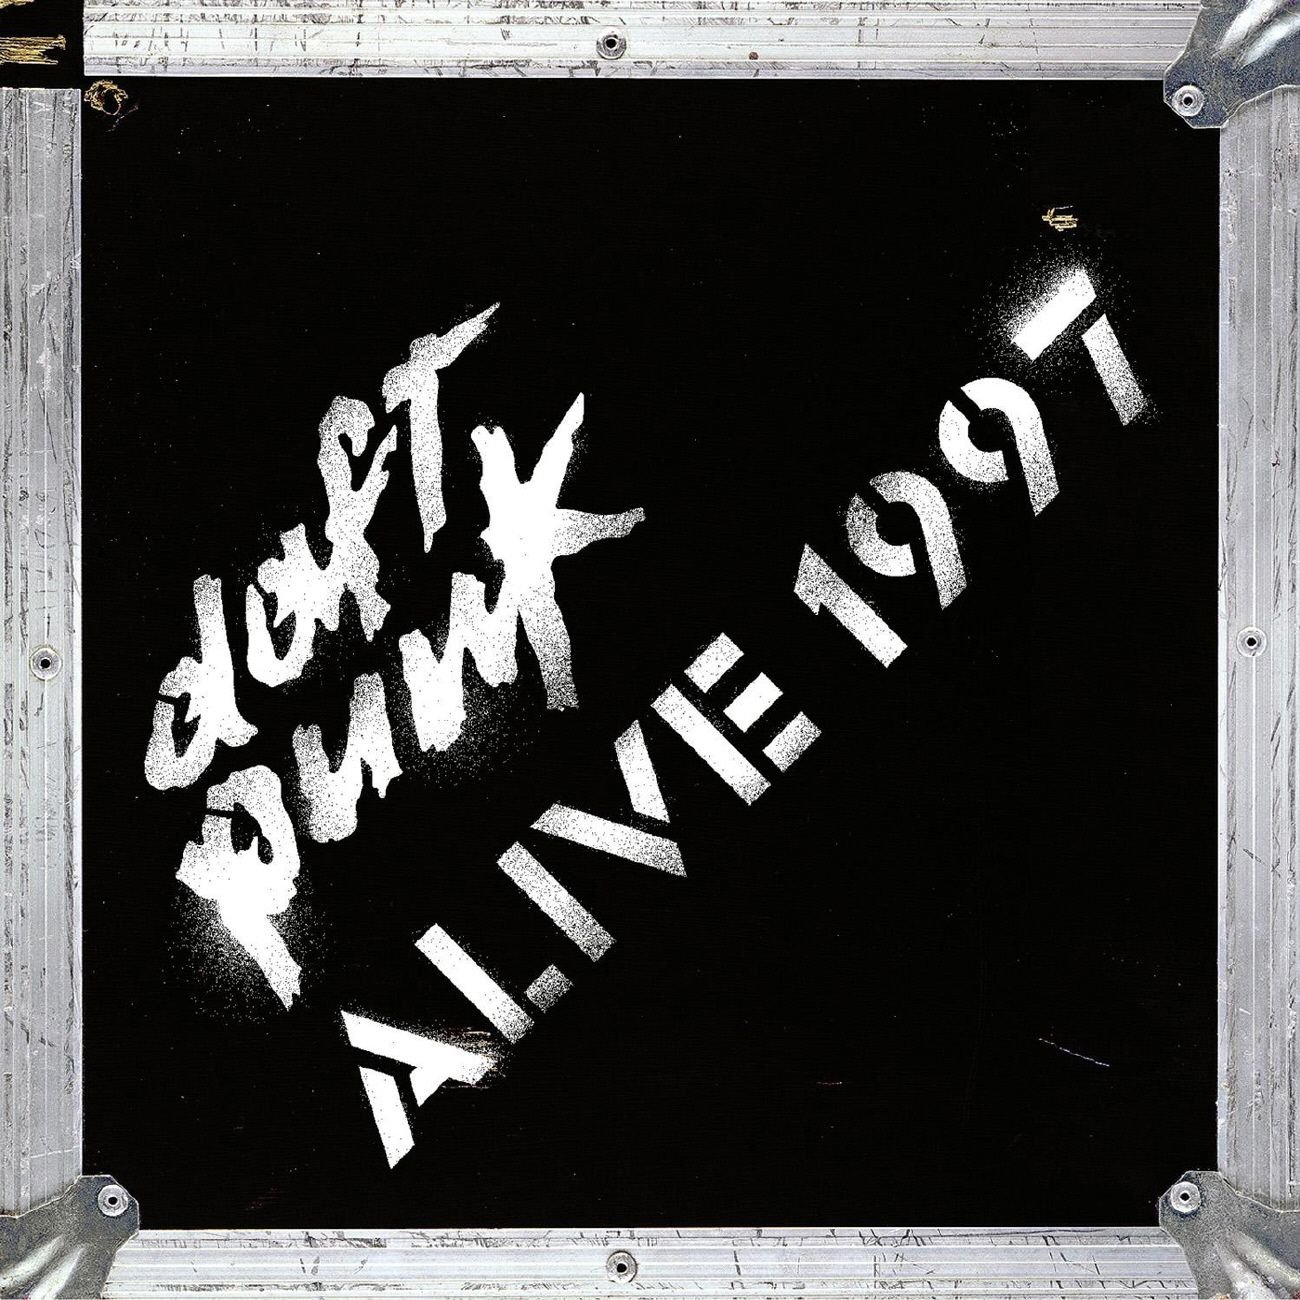 Daft Punk "Alive 1997" LP